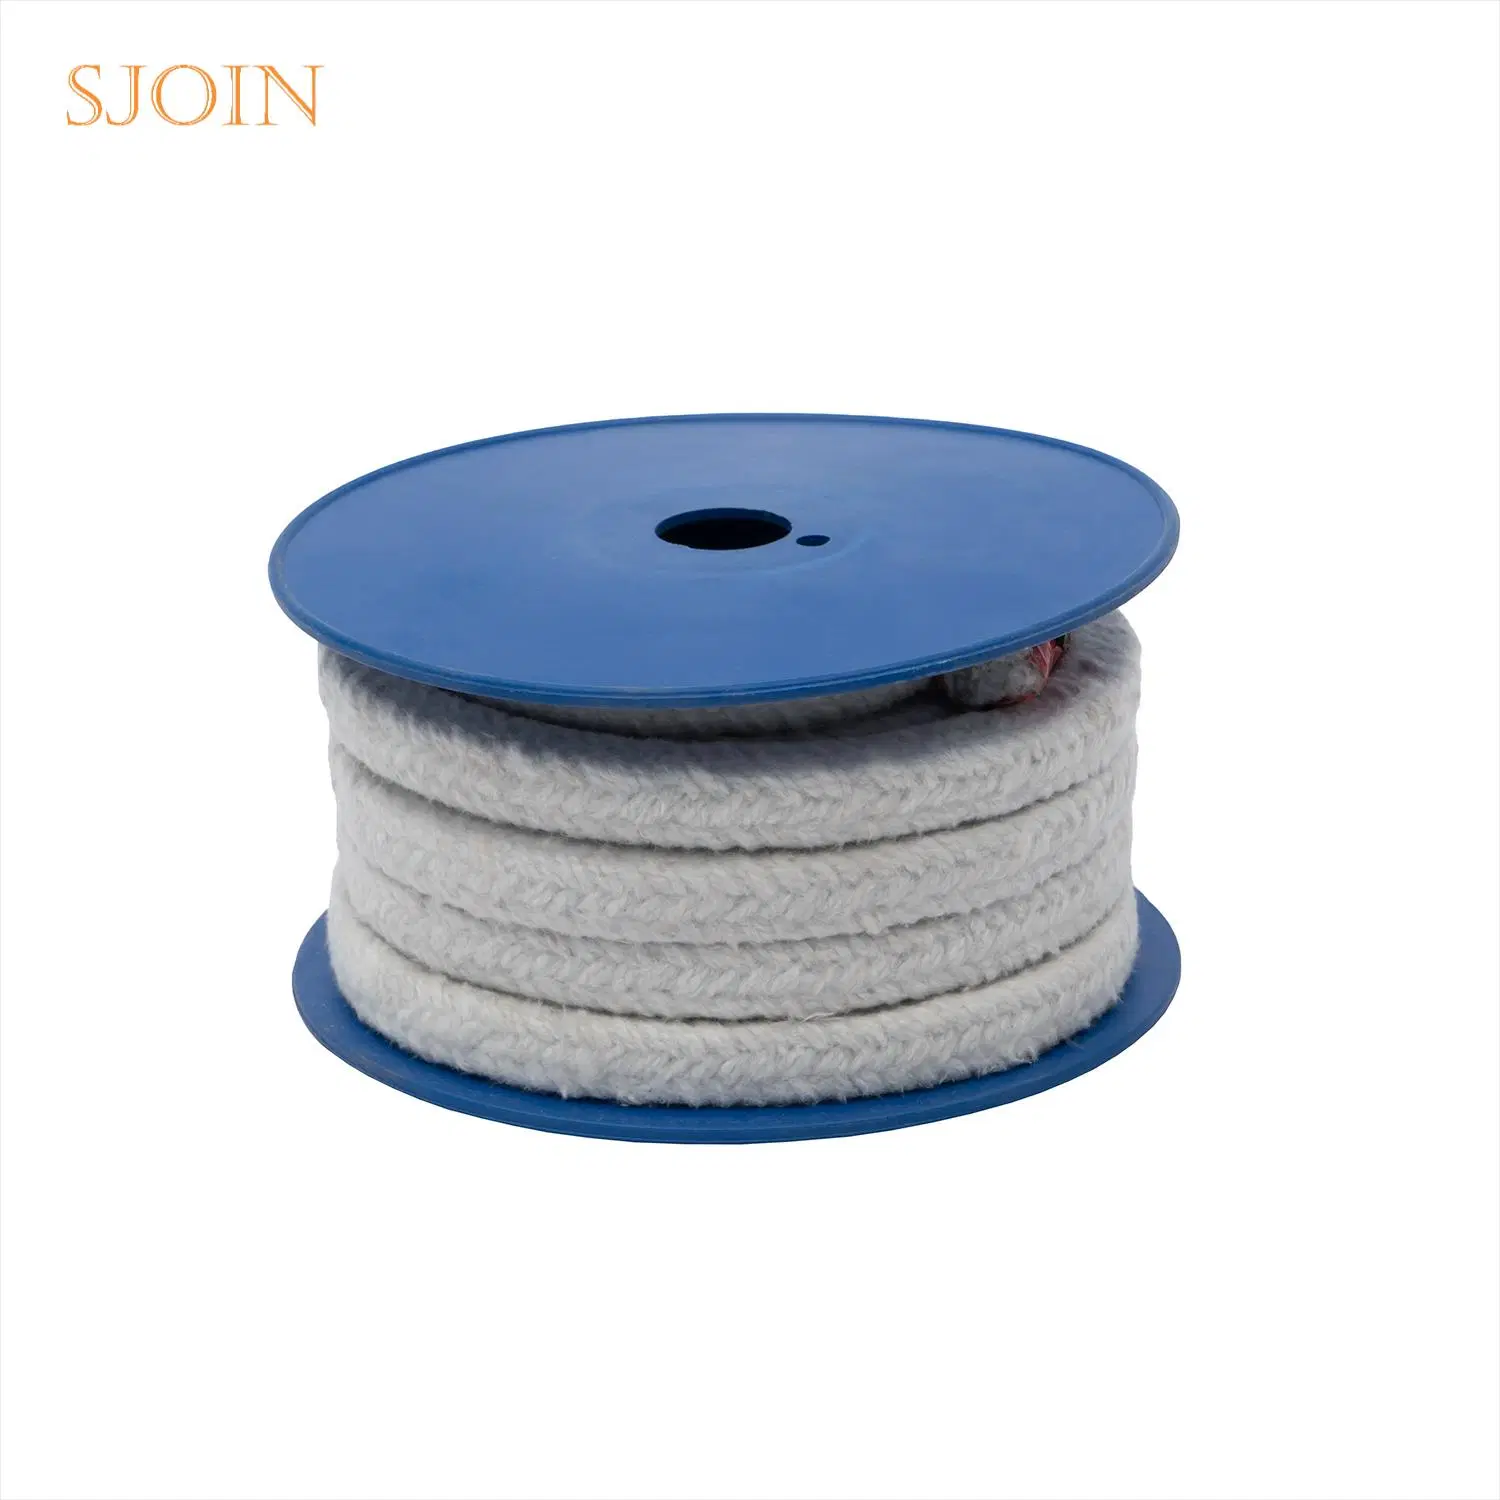 High-Temperature Seal Insulation Fiber Rope Cord Ceramic Packing for Stove Kiln Boiler Oven Door